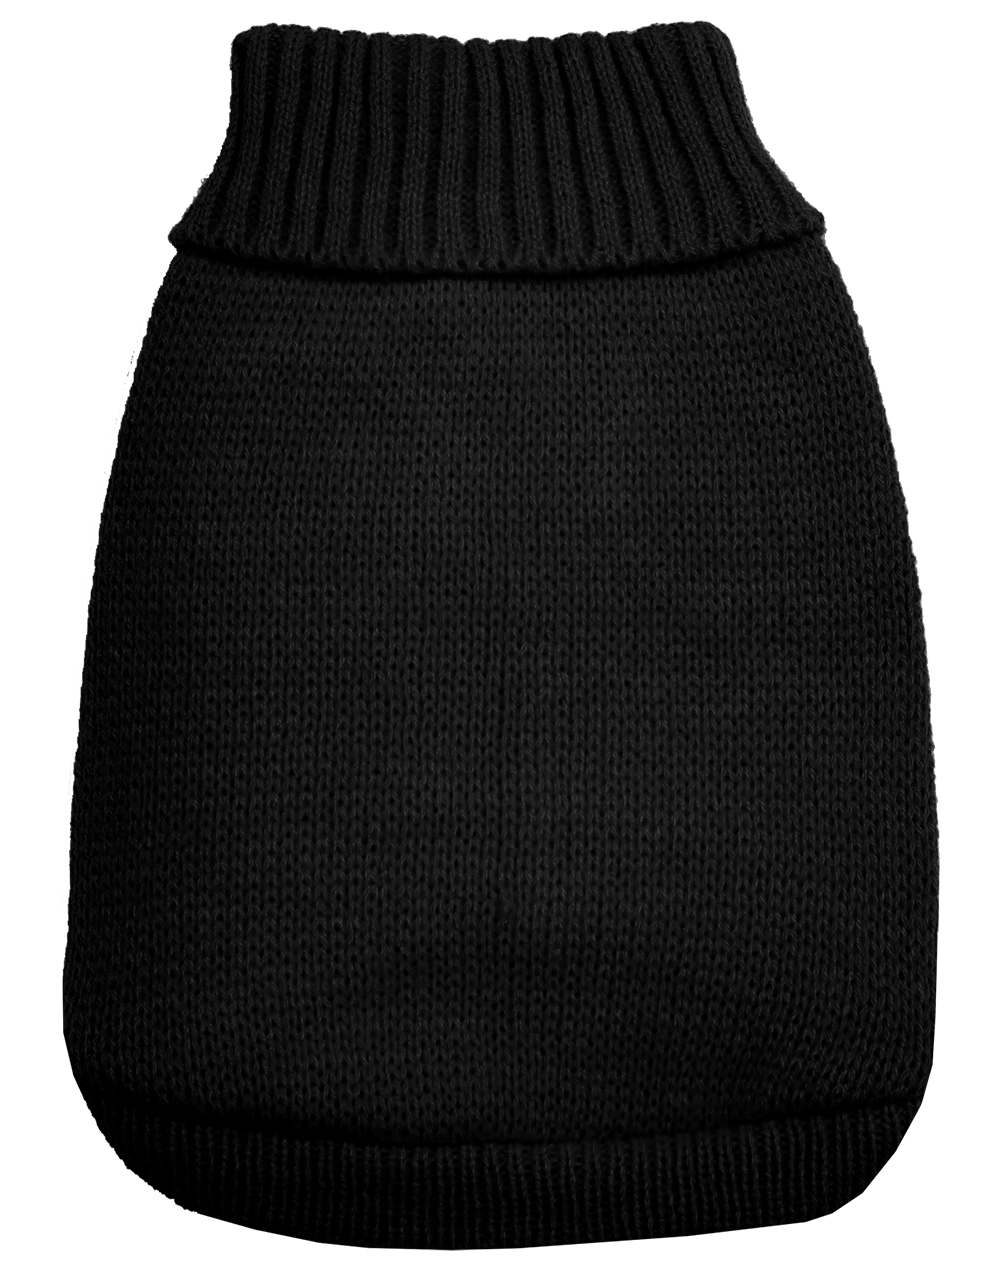 Knit Pet Sweater Black Size XXXL